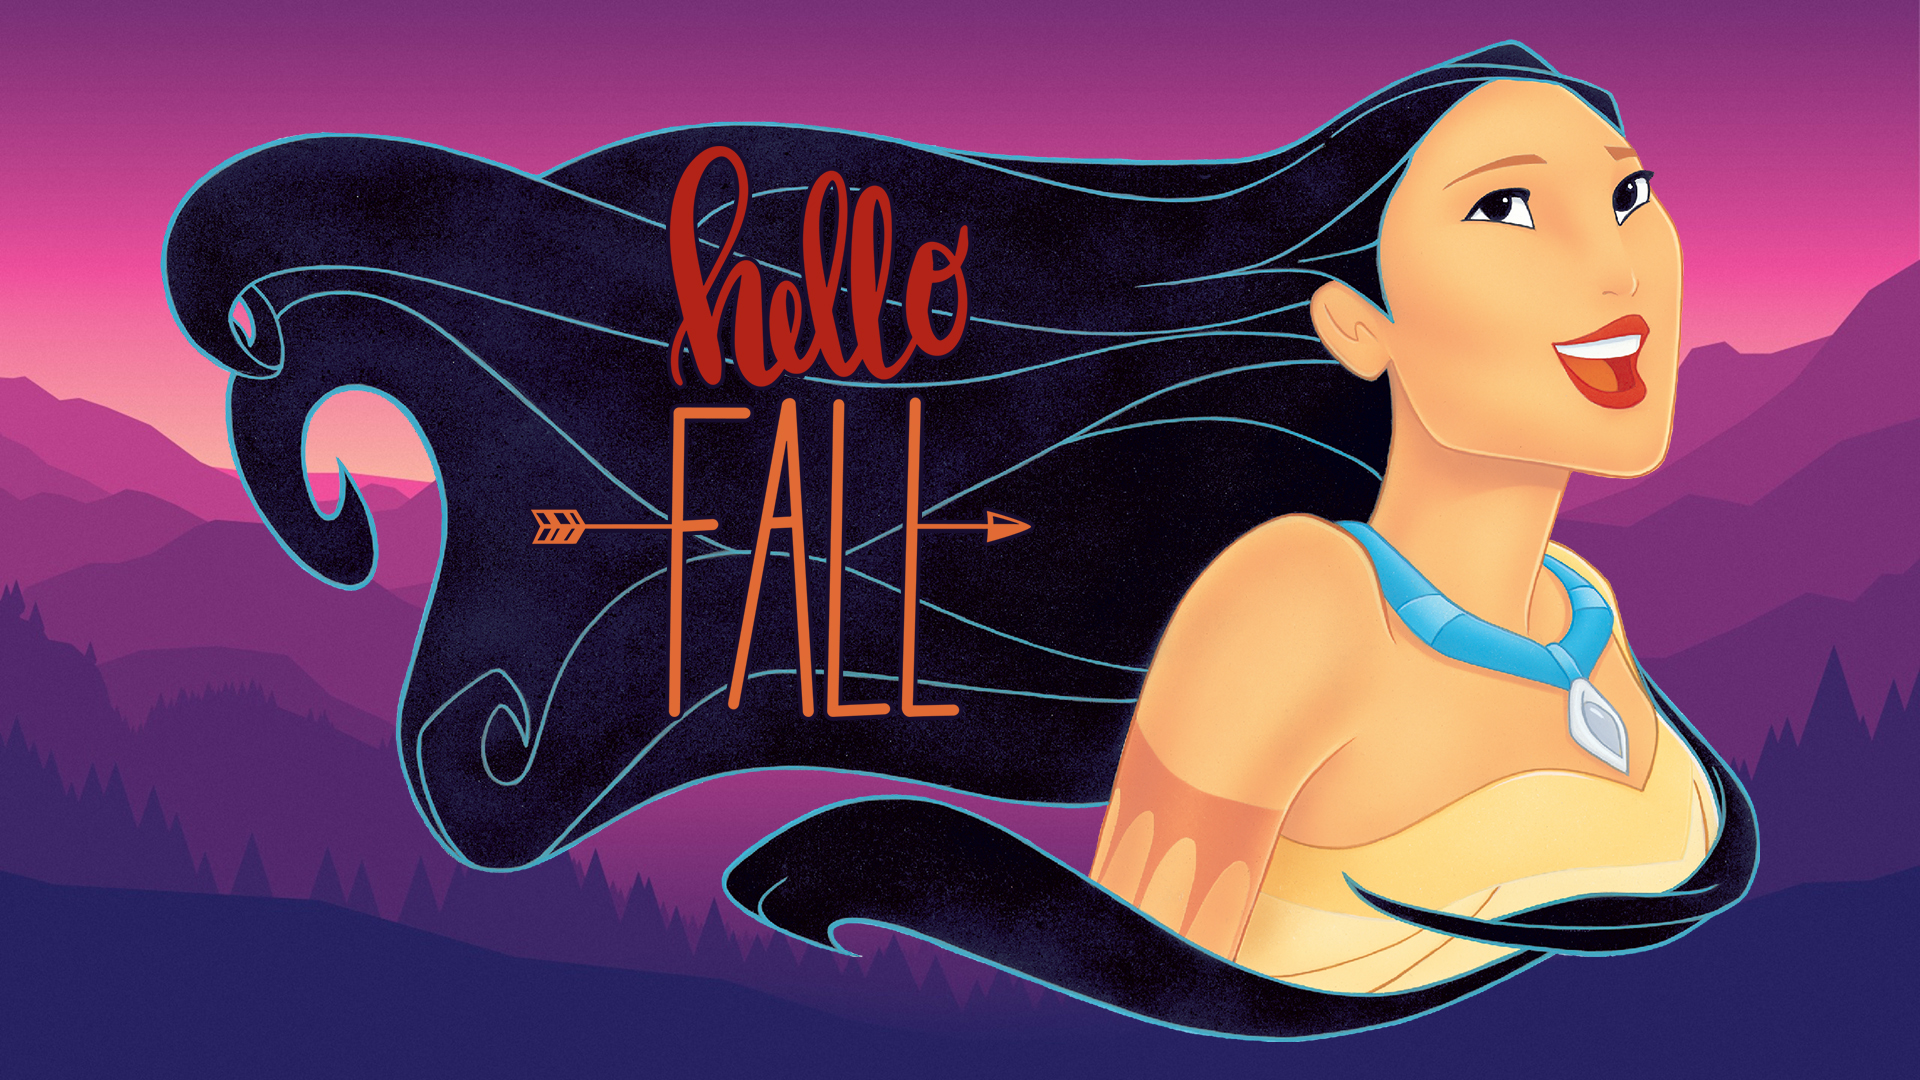 Hello Fall Image With Pocahontas - Pocahontas 2 - HD Wallpaper 